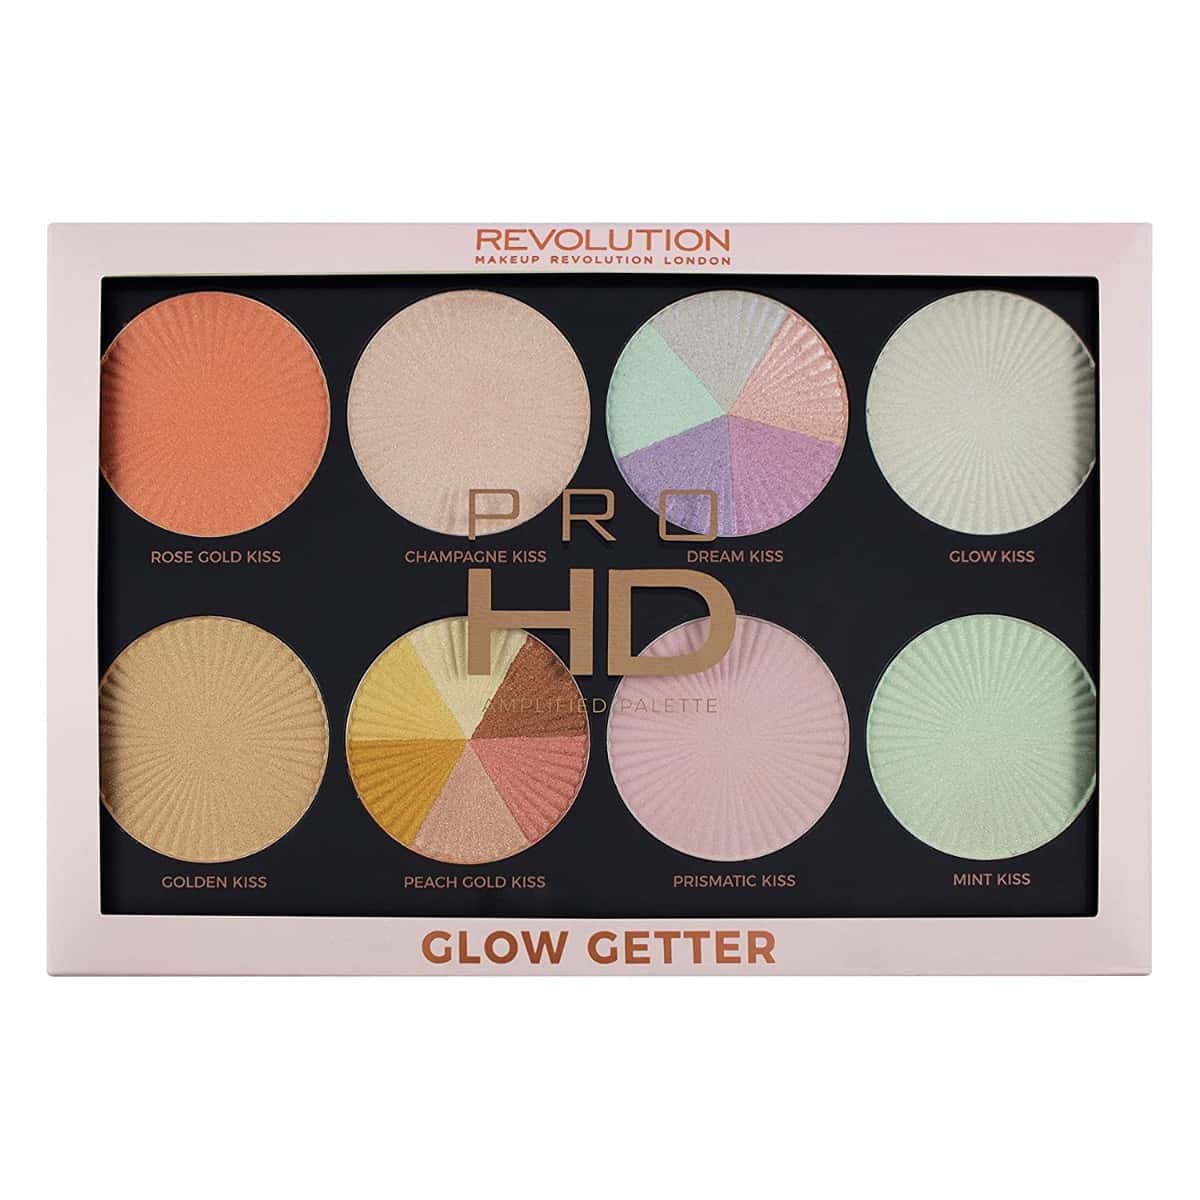 Makeup Revolutio Pro Hd Palette Glow Getter